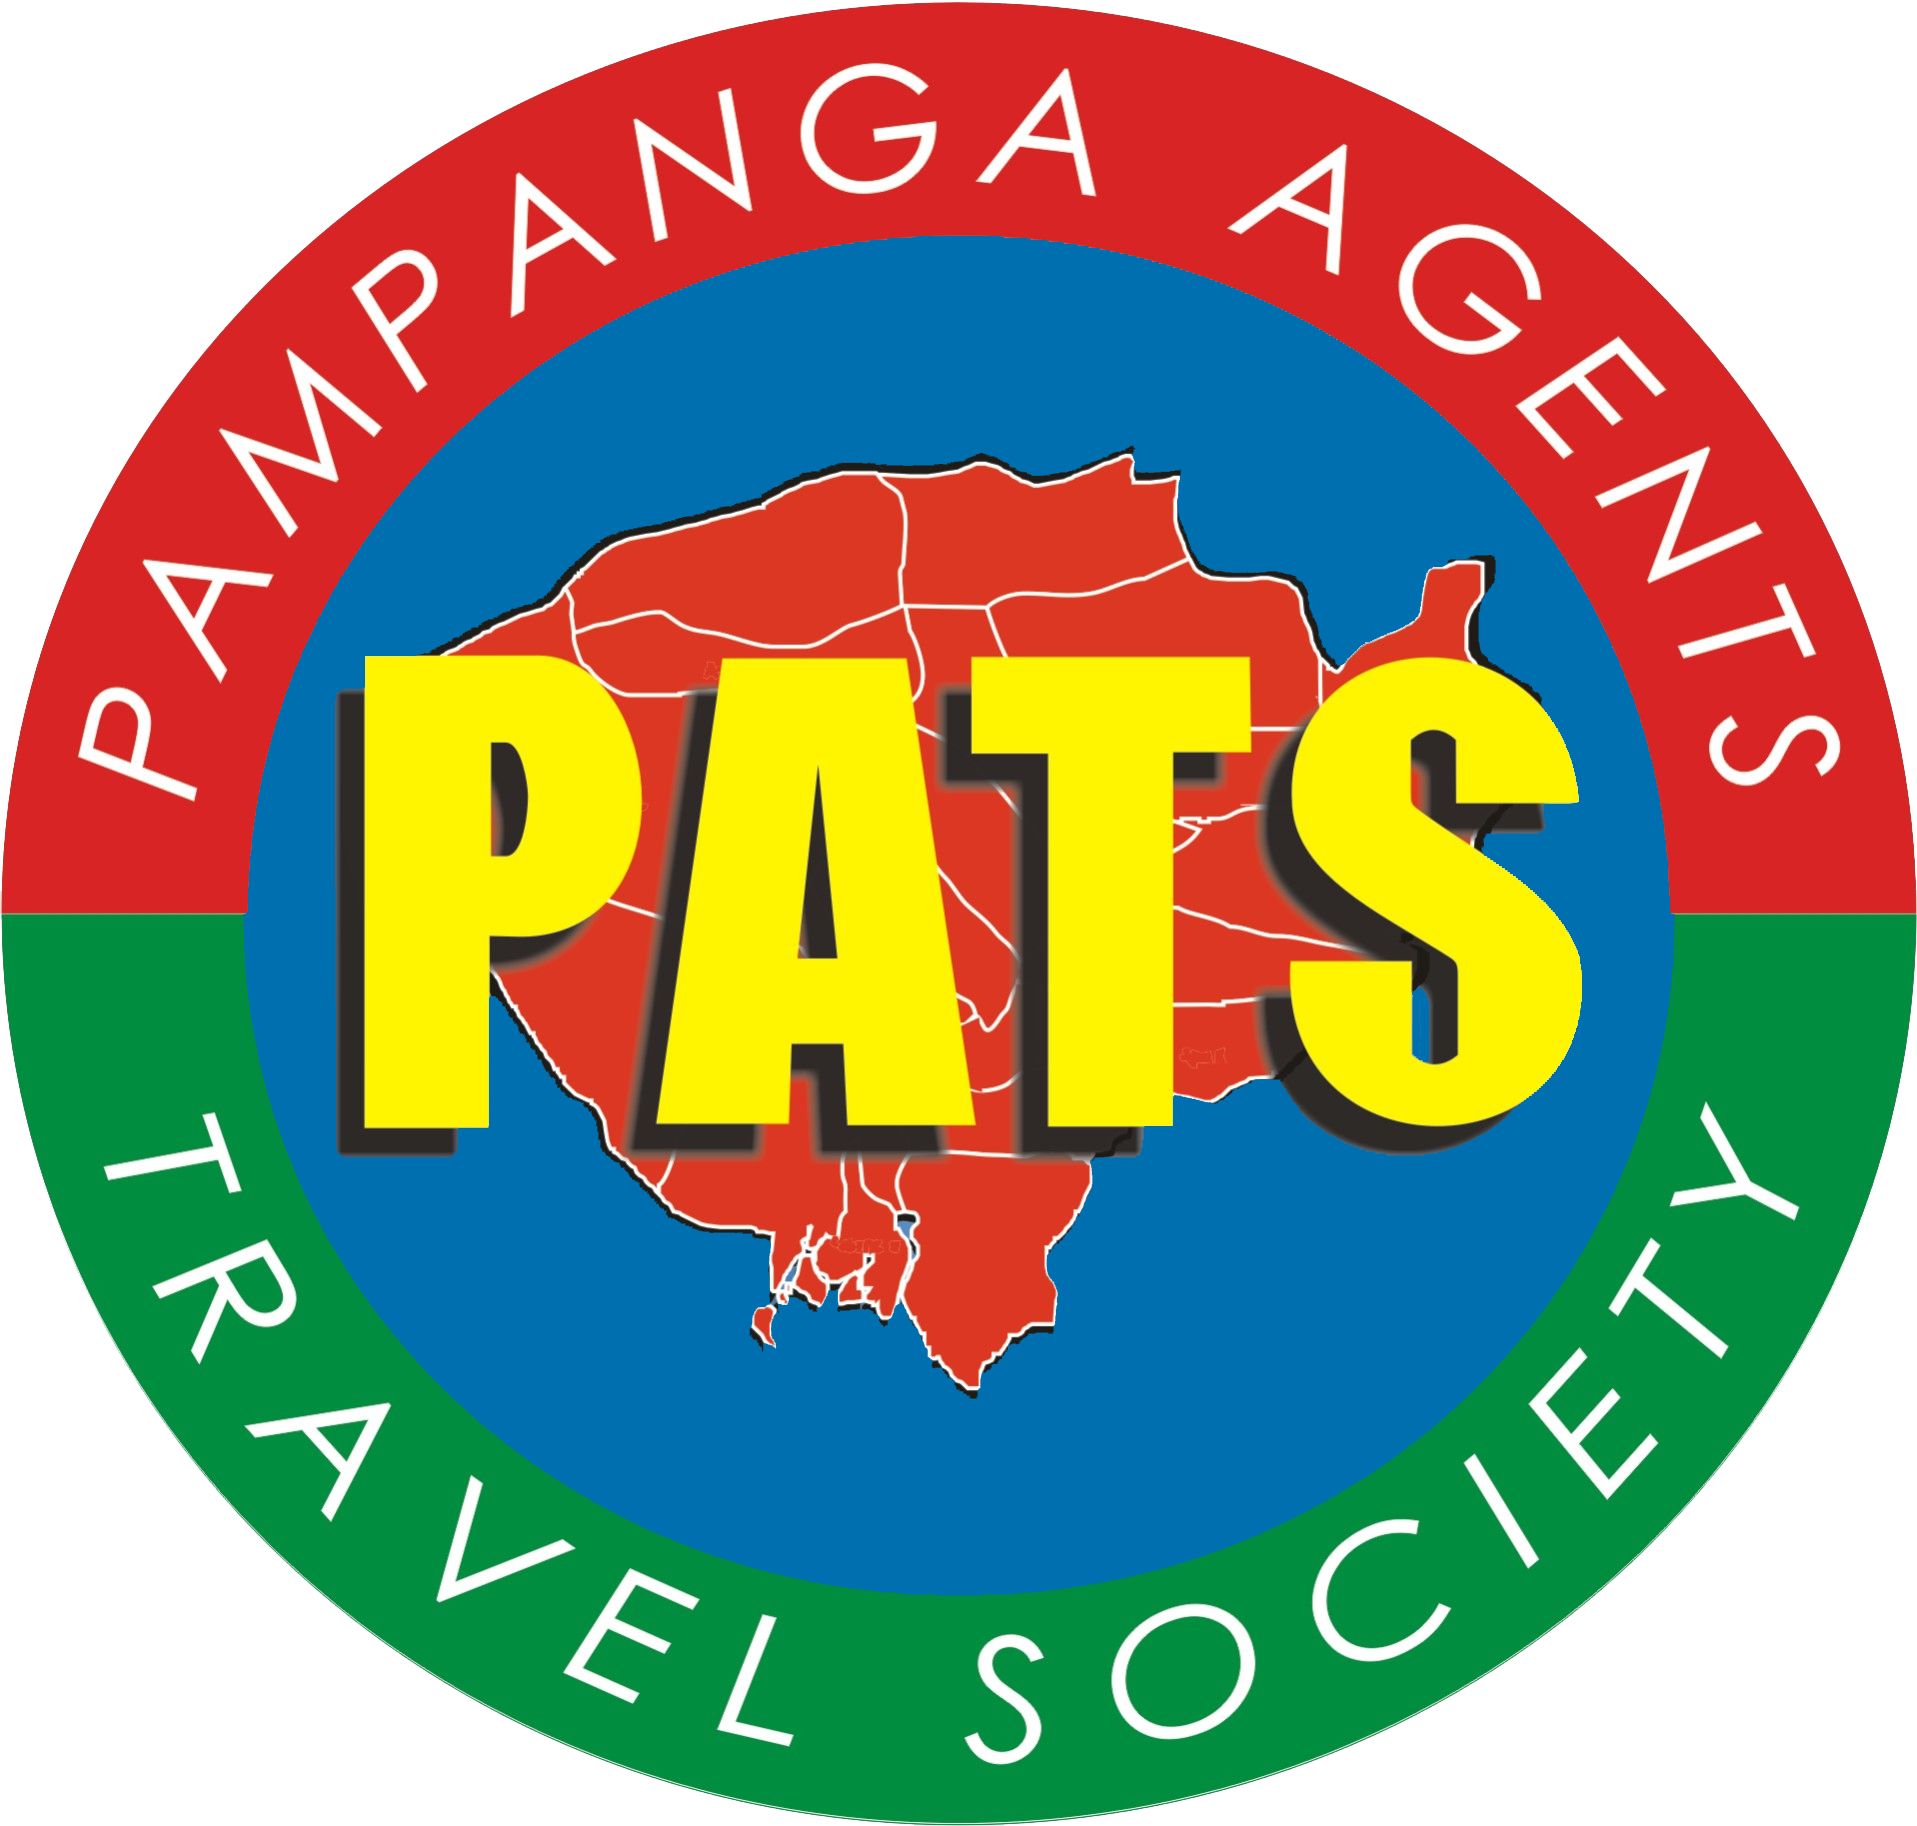 pampanga agents travel society